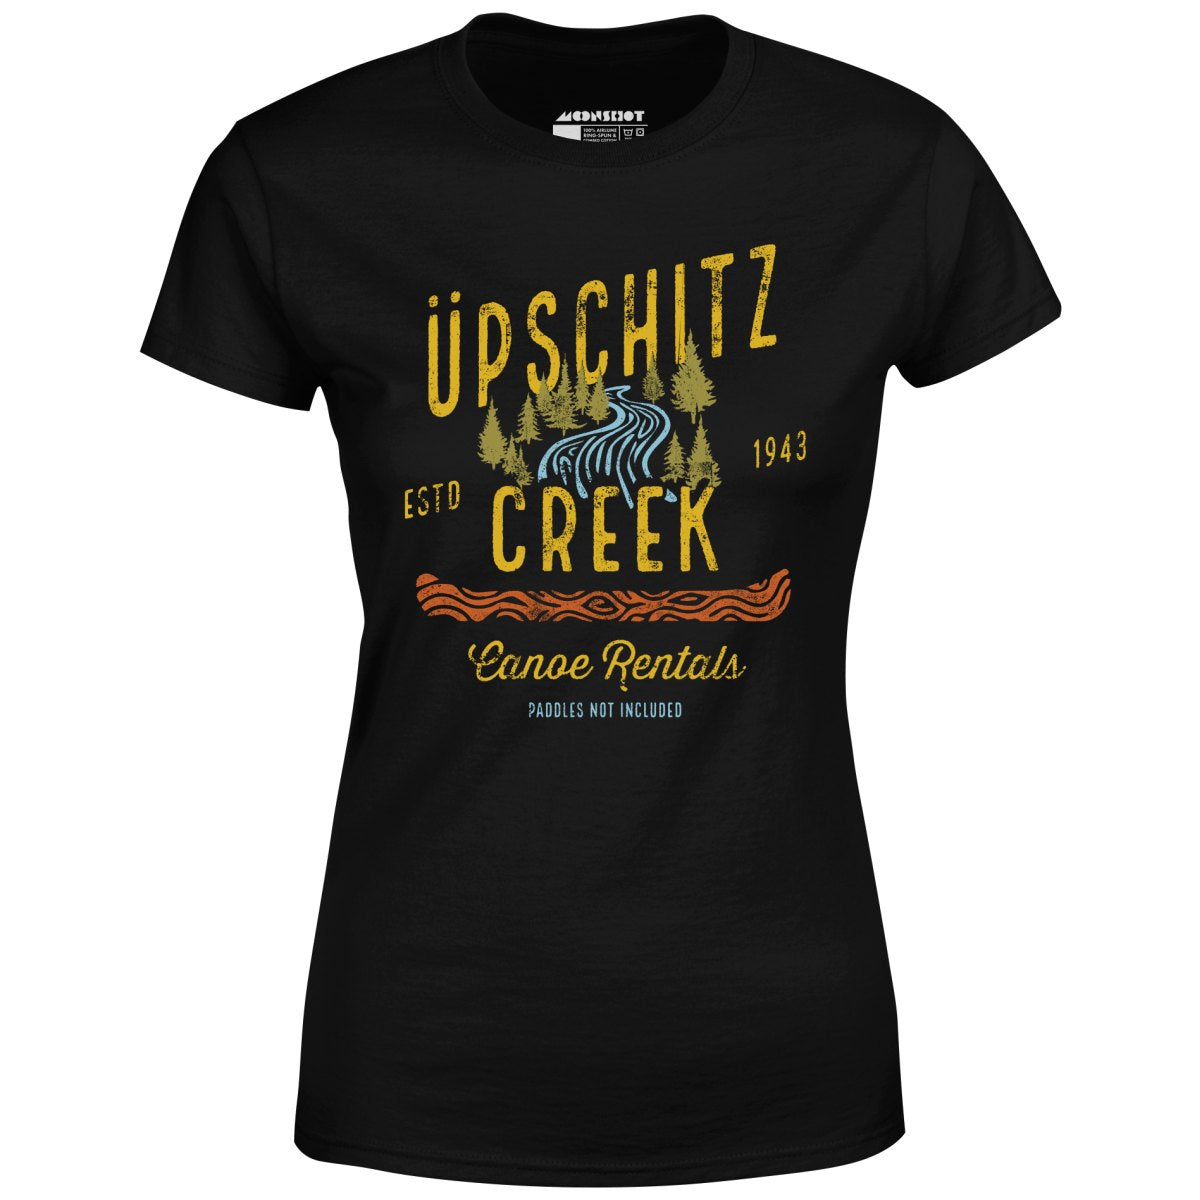 Upschitz Creek - Women's T-Shirt